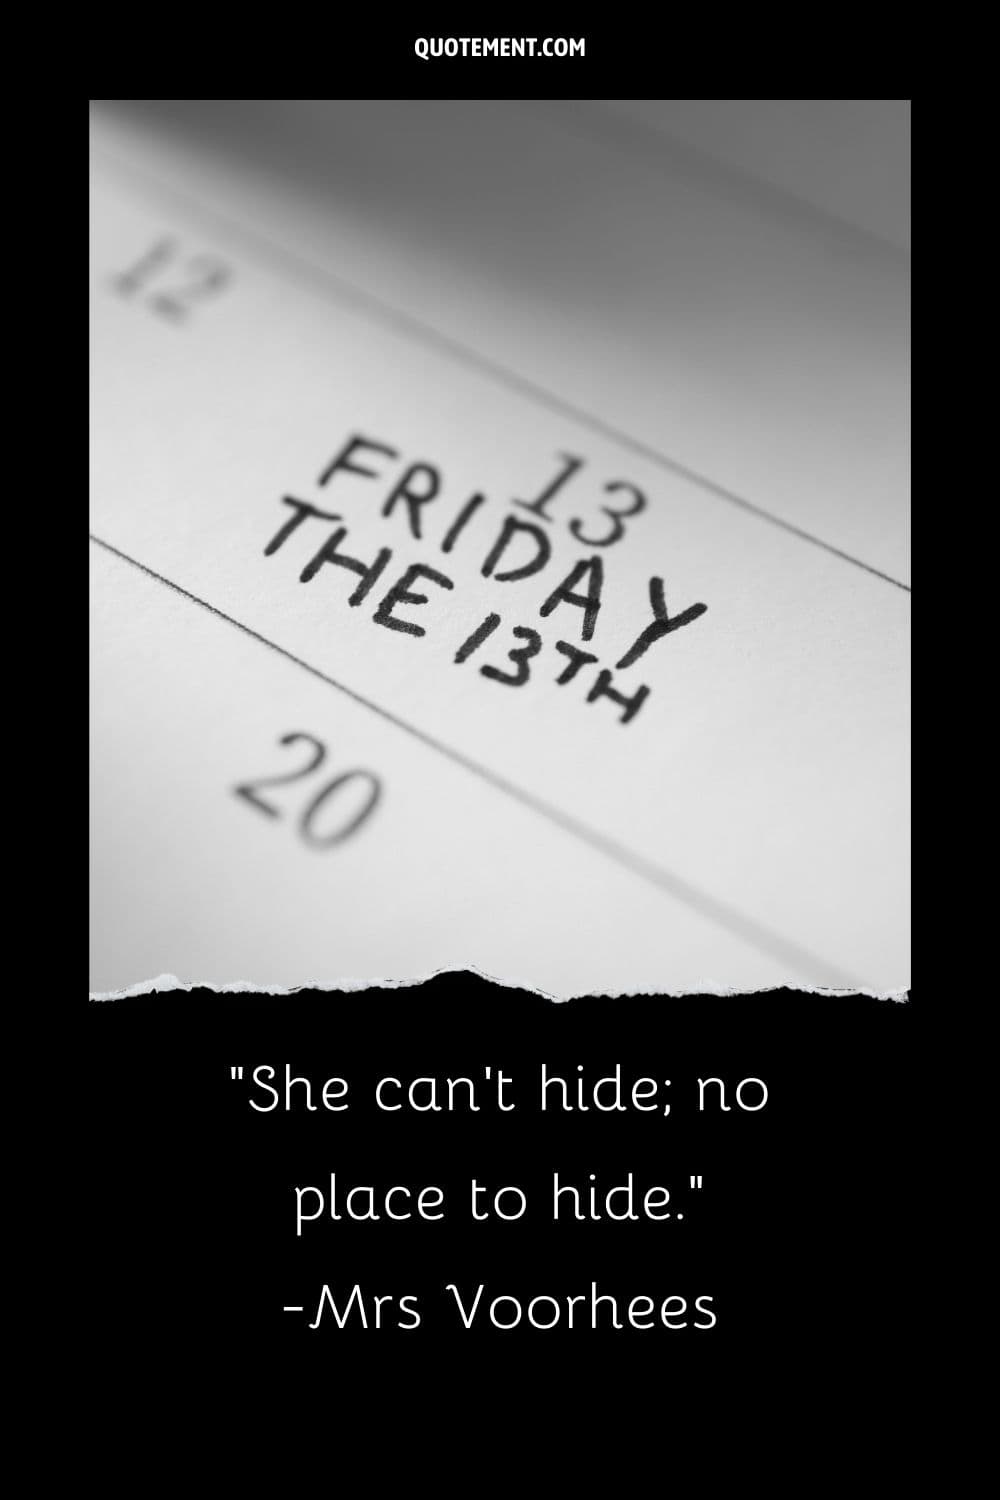 Spooky Day Friday the 13th on Calendar.